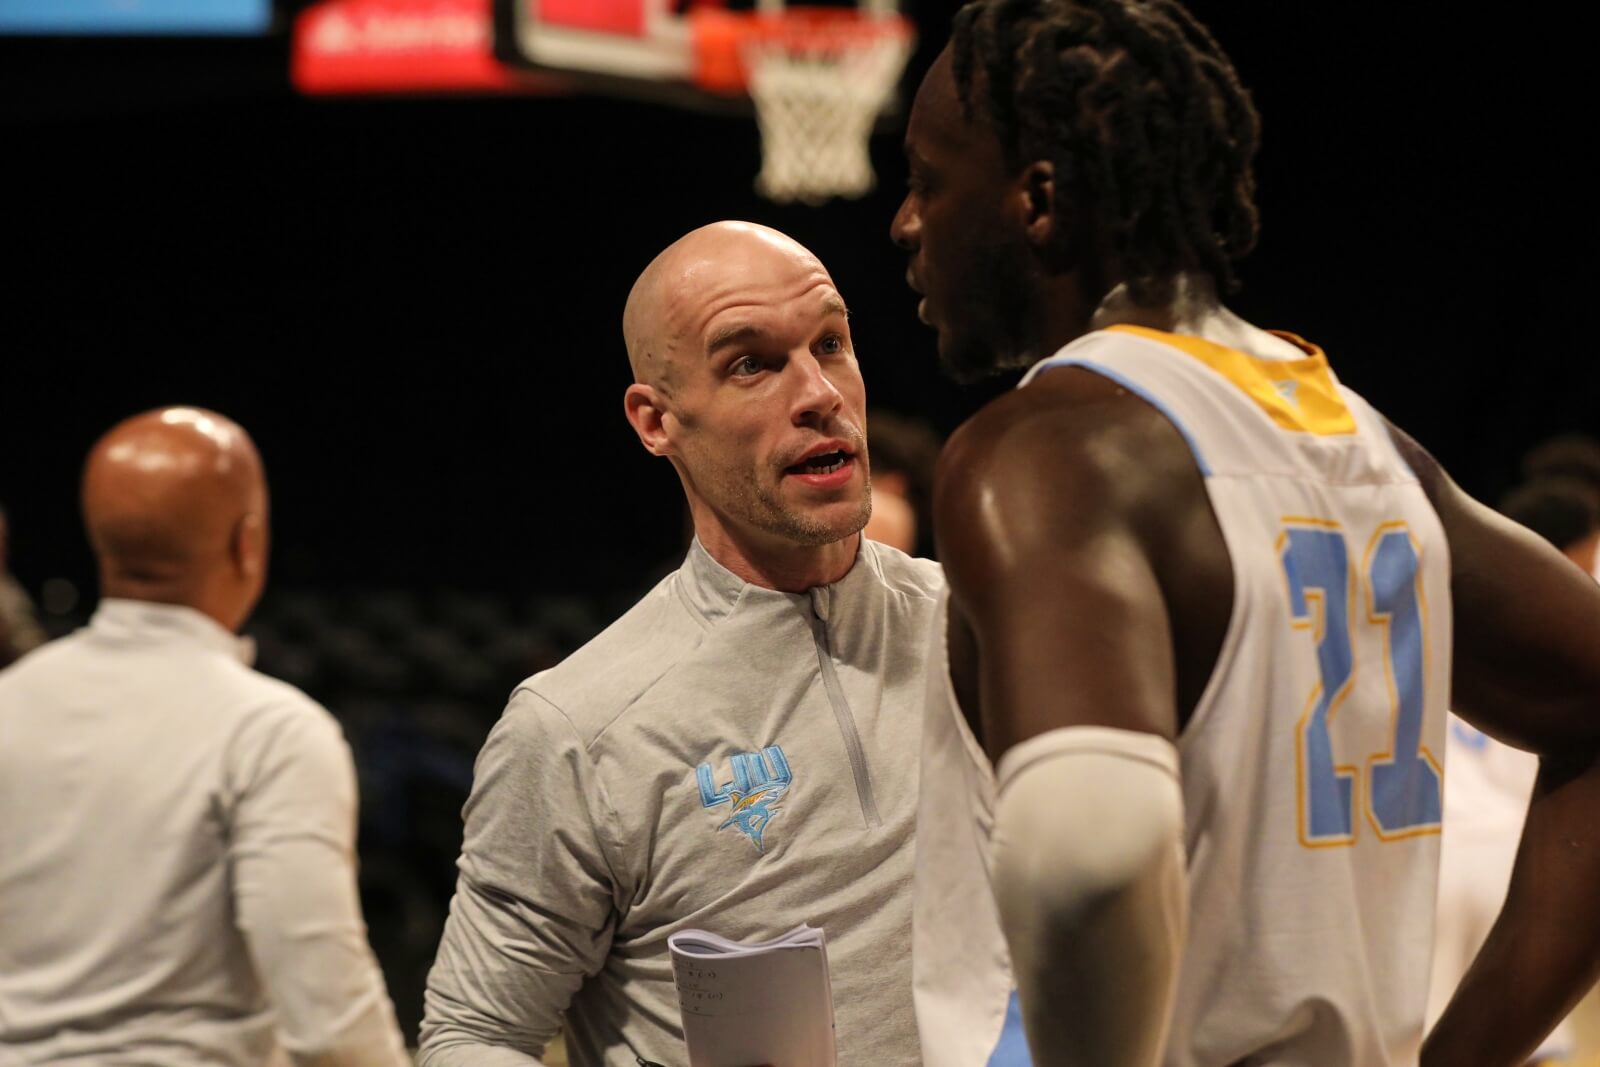 LIU Basketball assistant coach Chris Thomas hypes up his players during an NCAA men's basketball matchup